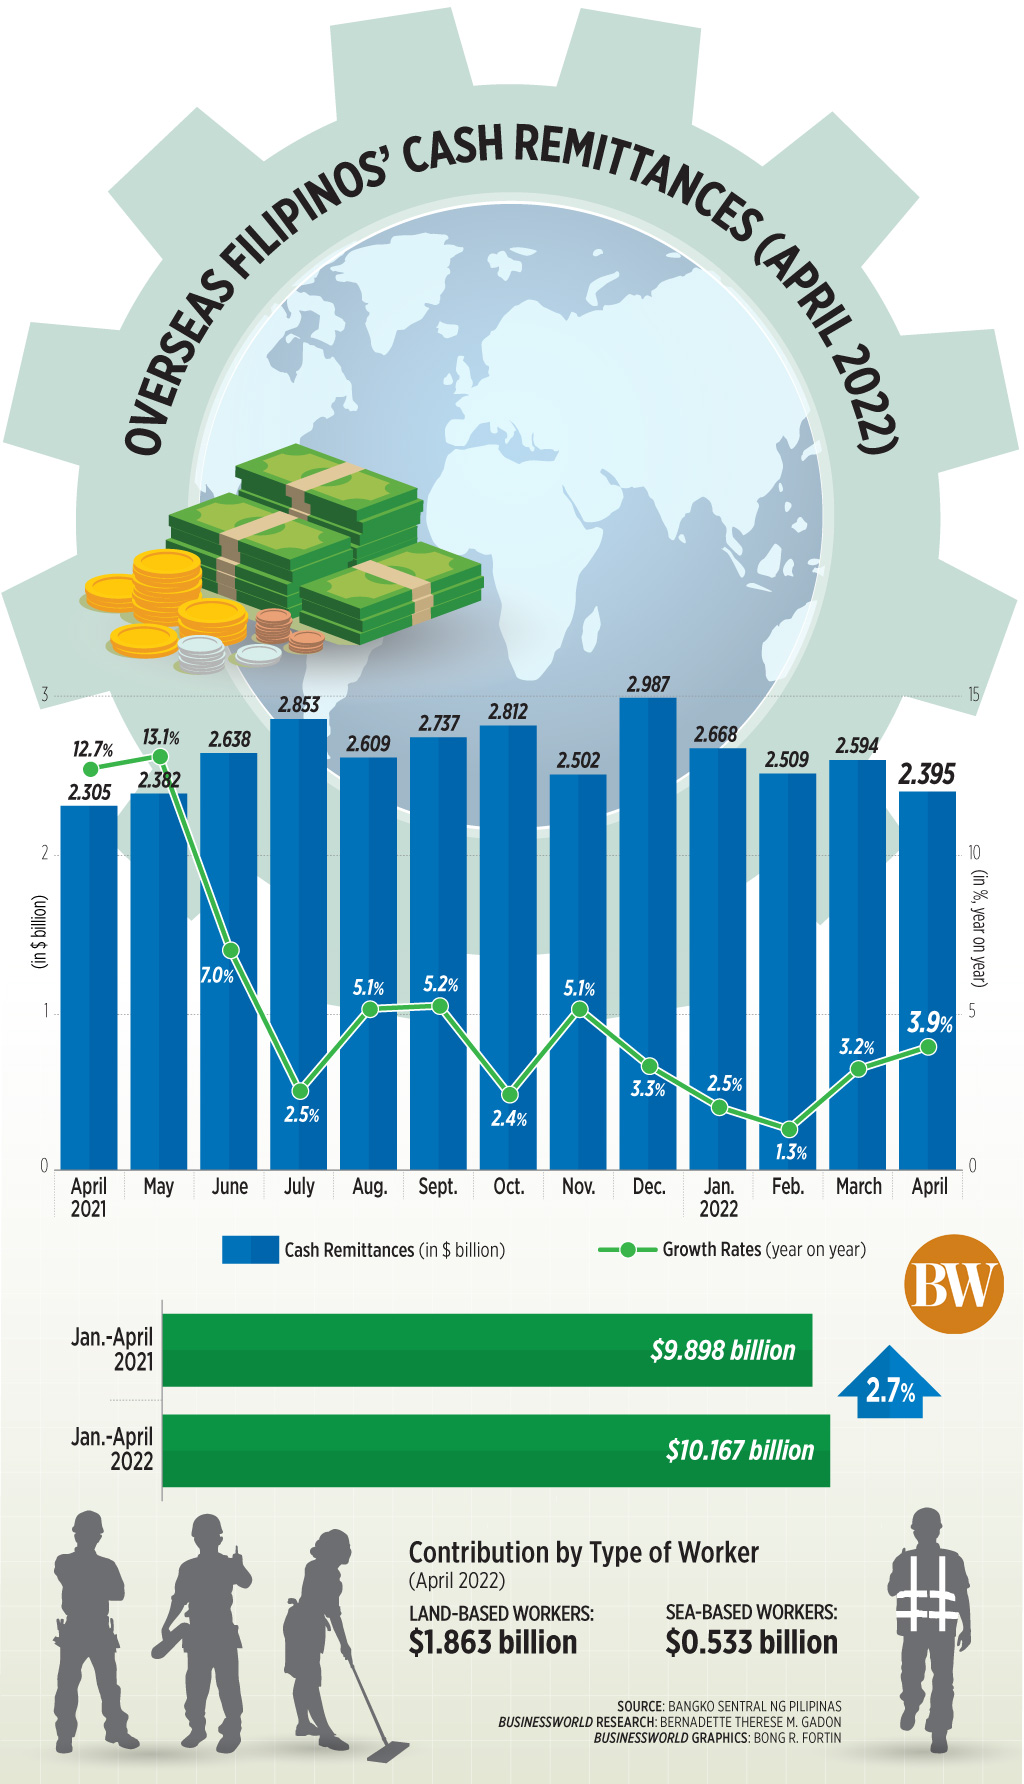 Overseas Filipinos’ cash remittances (April 2022)